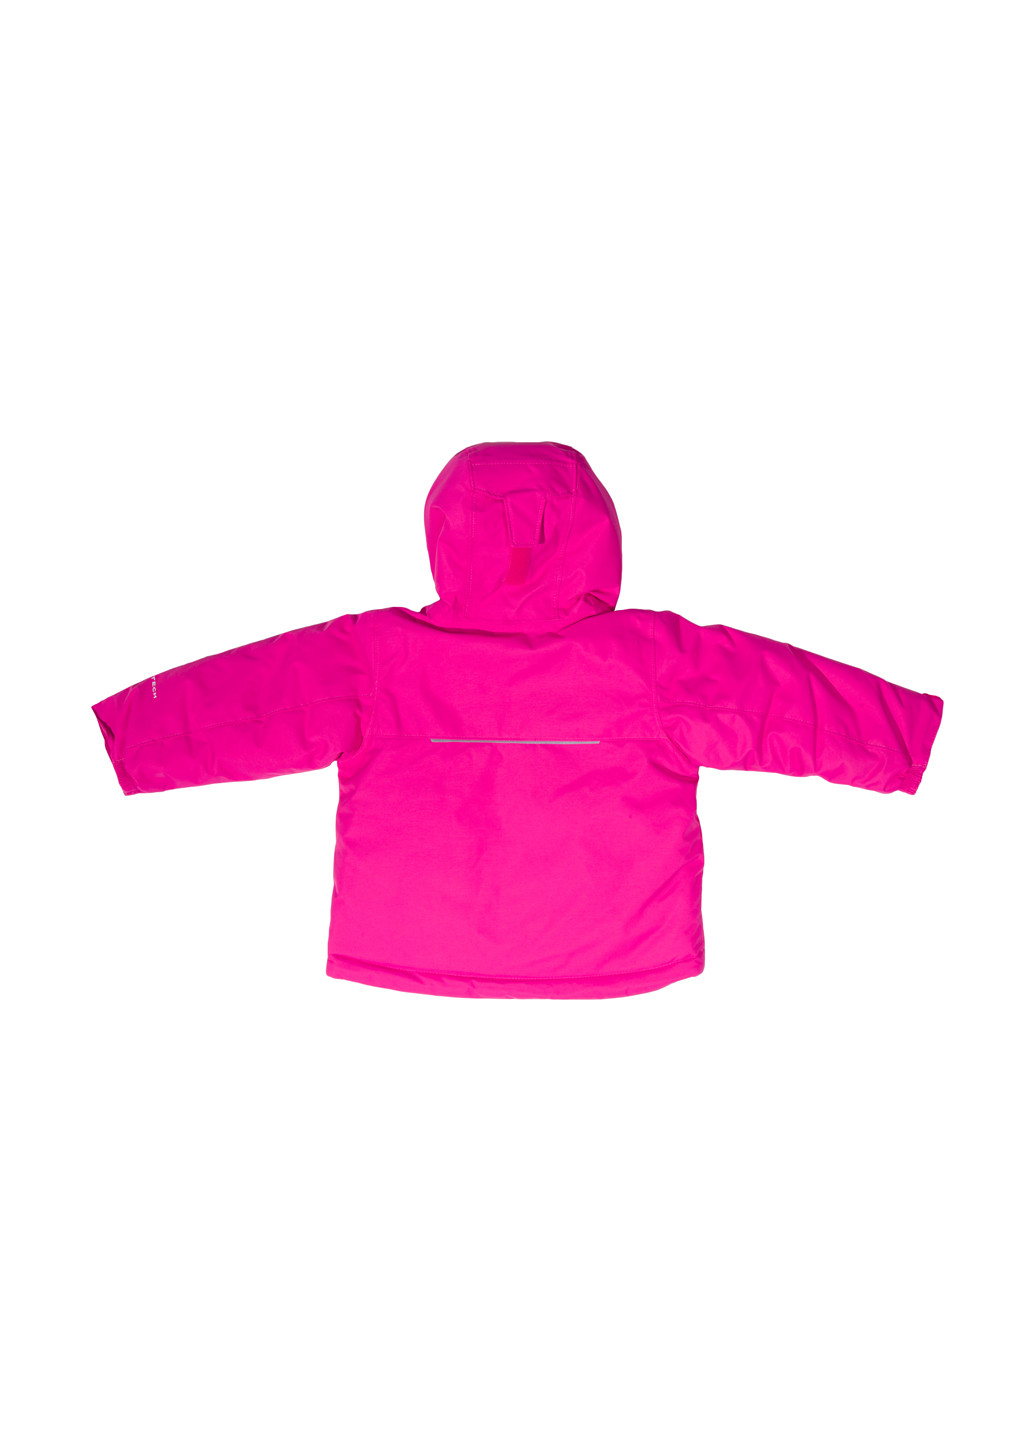 Розовый зимний комплект (куртка, комбинезон) Columbia